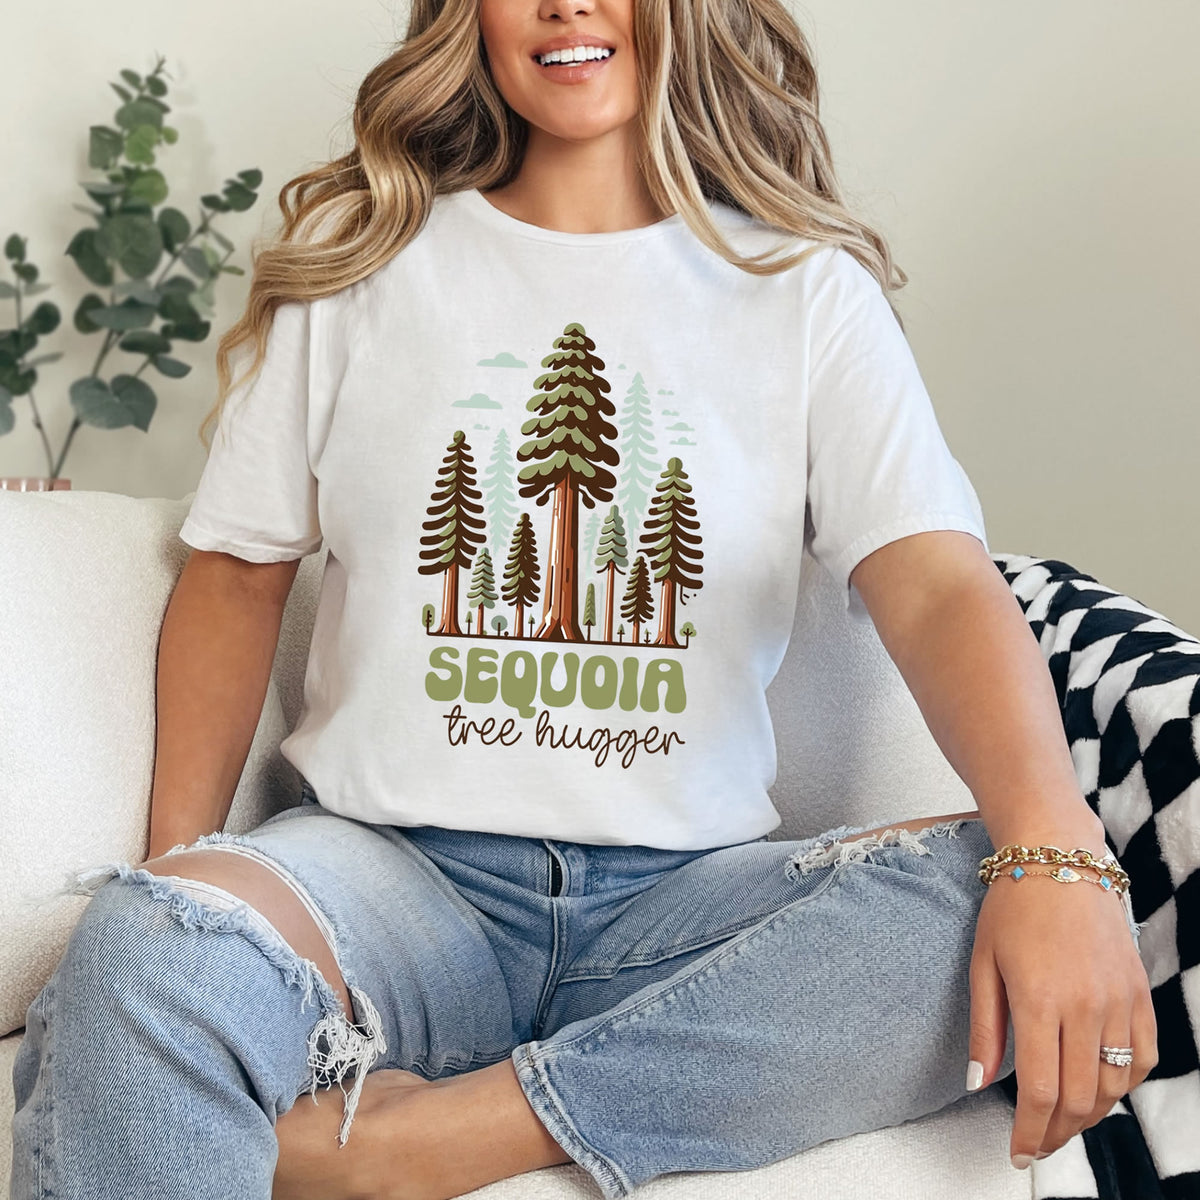 Sequoia National Park Shirt | Sequoia Tree Hugger Shirt  | White Unisex T-shirt